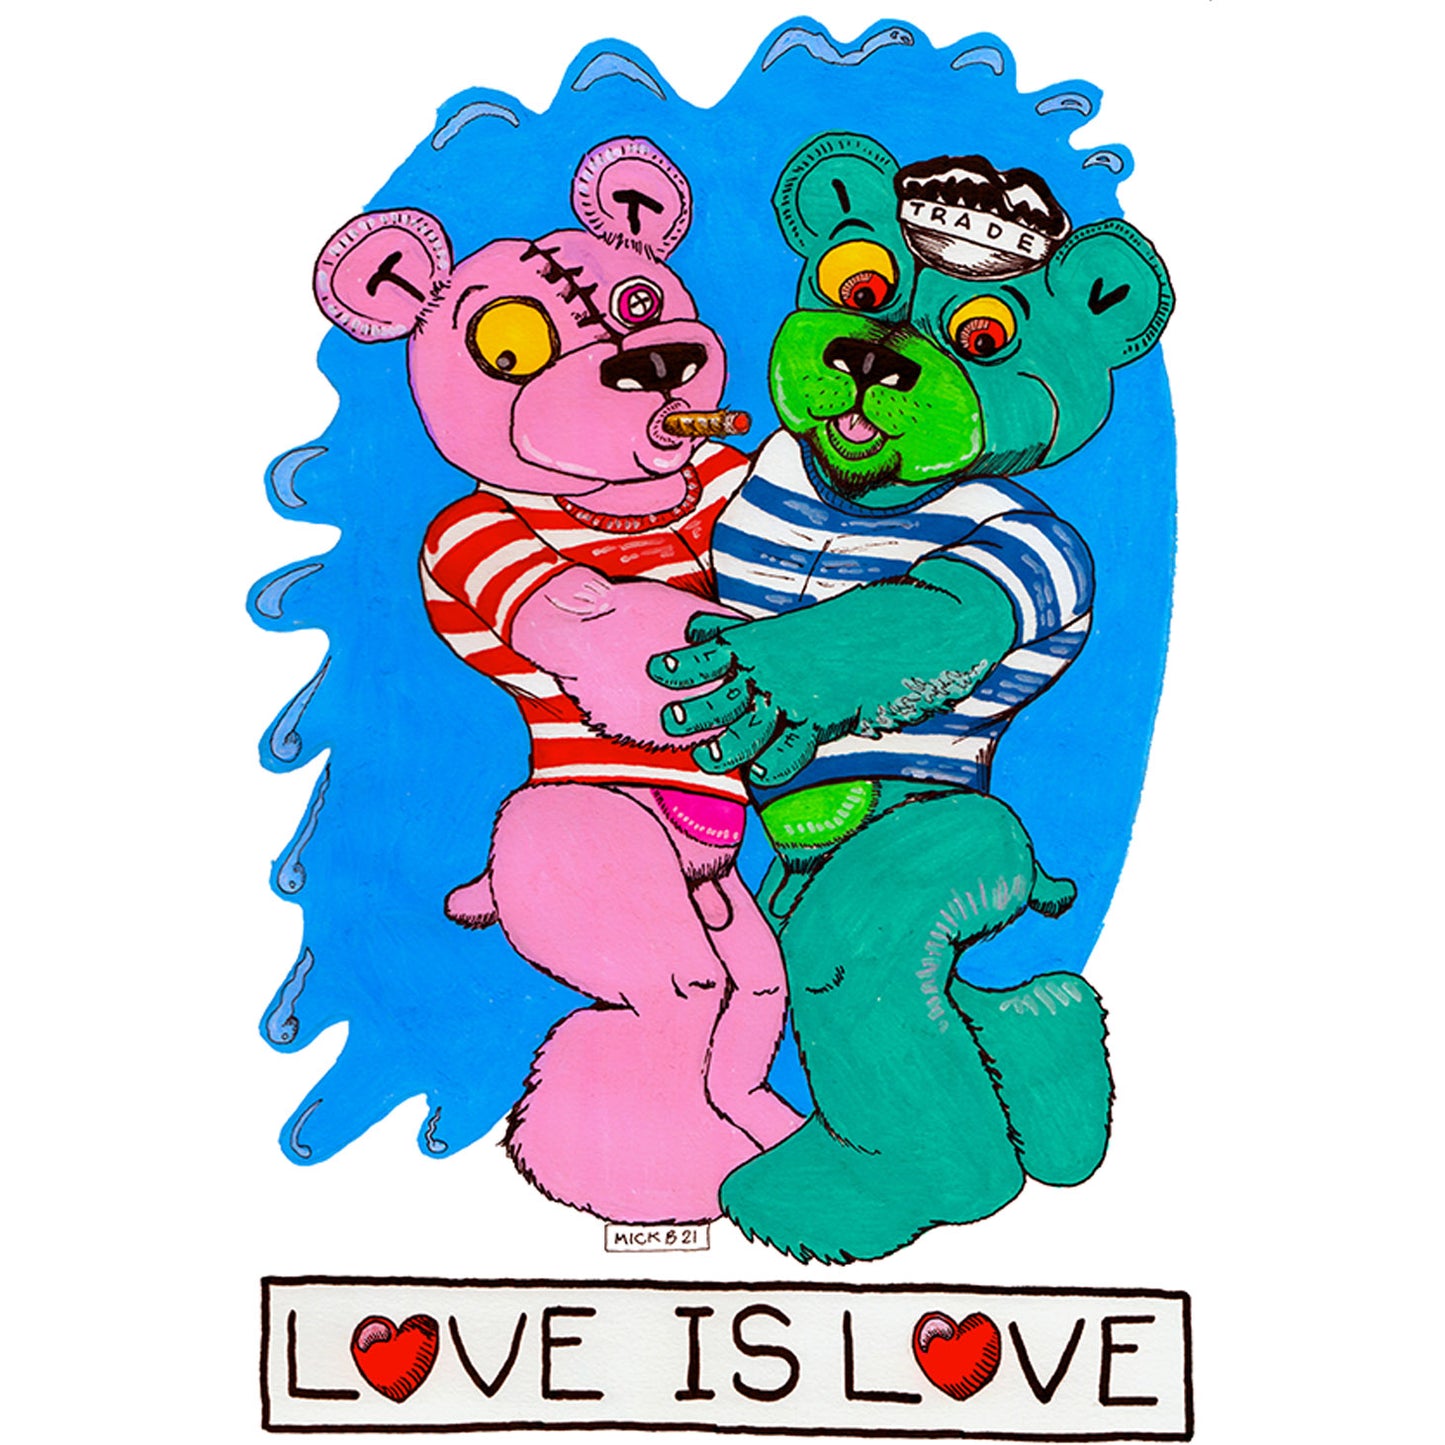 Erik and Oscar Love is Love T-shirt